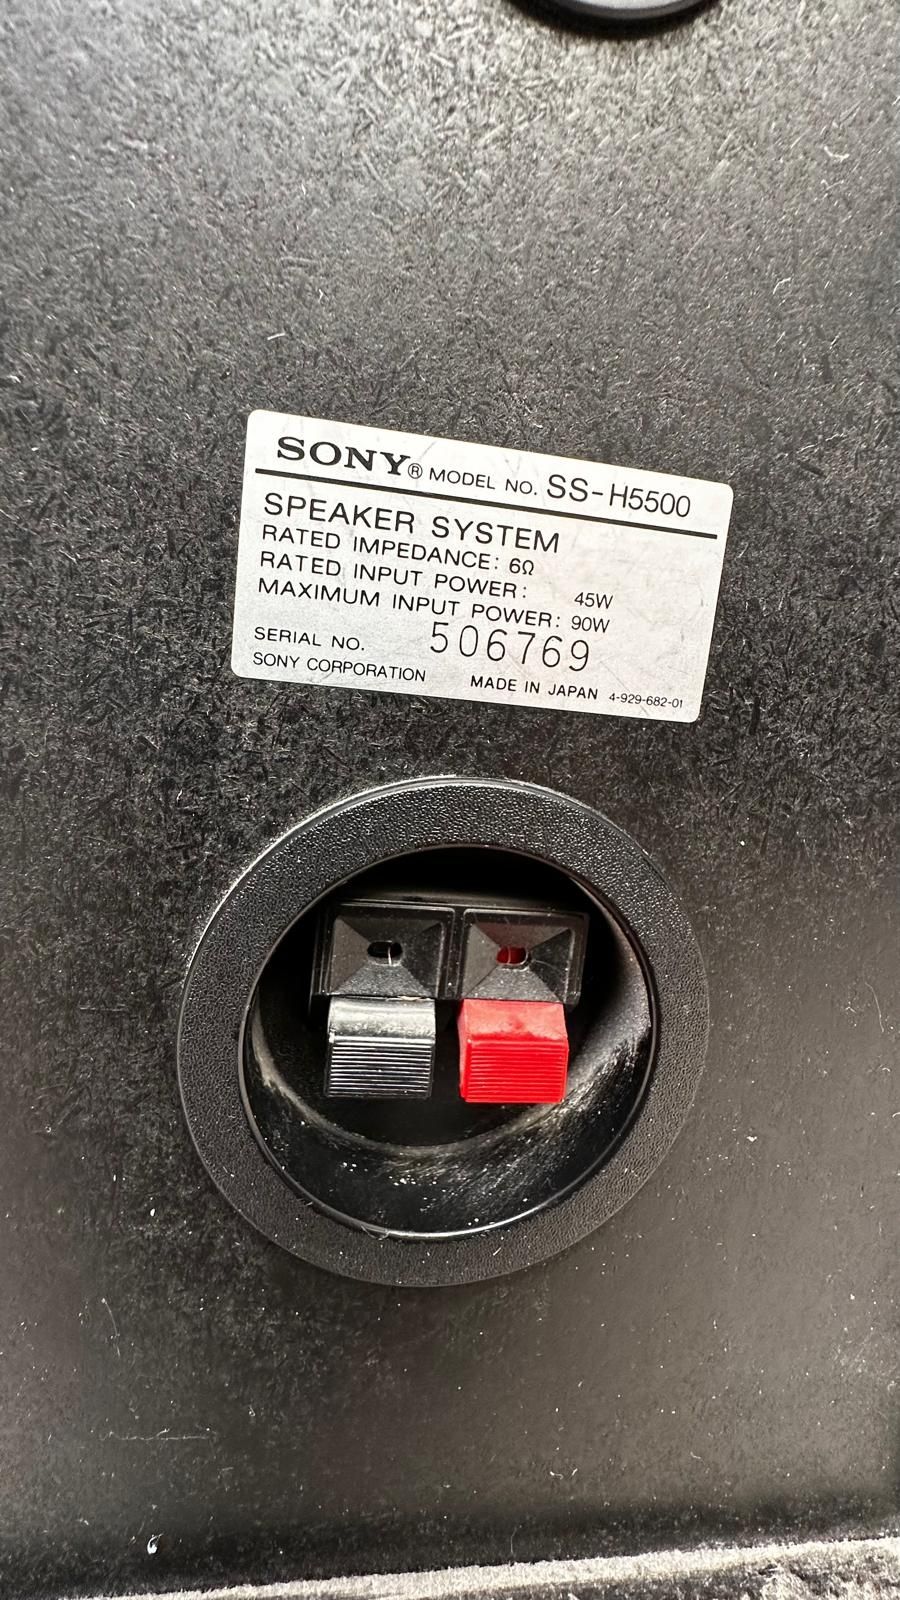 Sony SS-h5500 originale